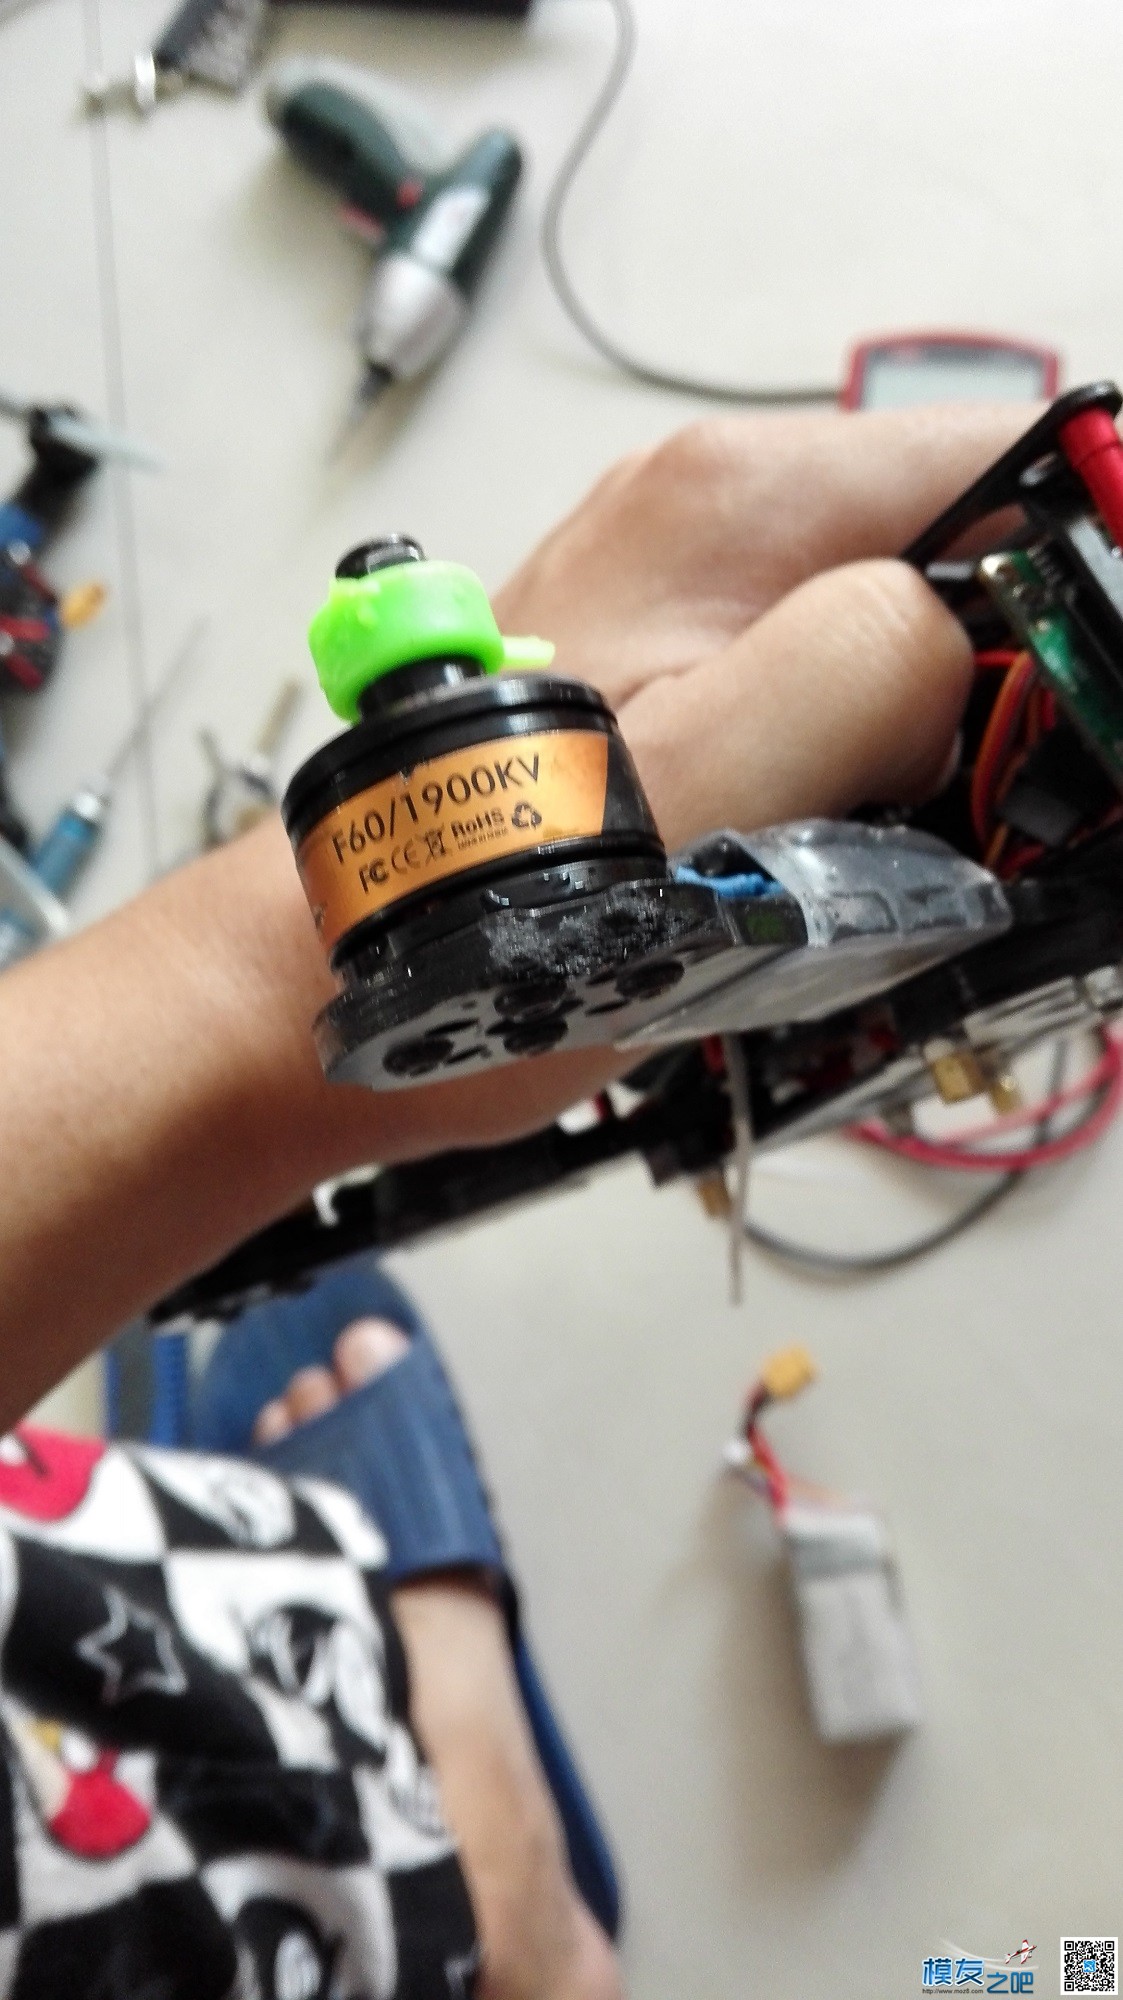 T-MOTOR 破风系列，开箱测评 （更新炸机视频） 电池,电机,炸机,机架 作者:pdwdwdw 7248 